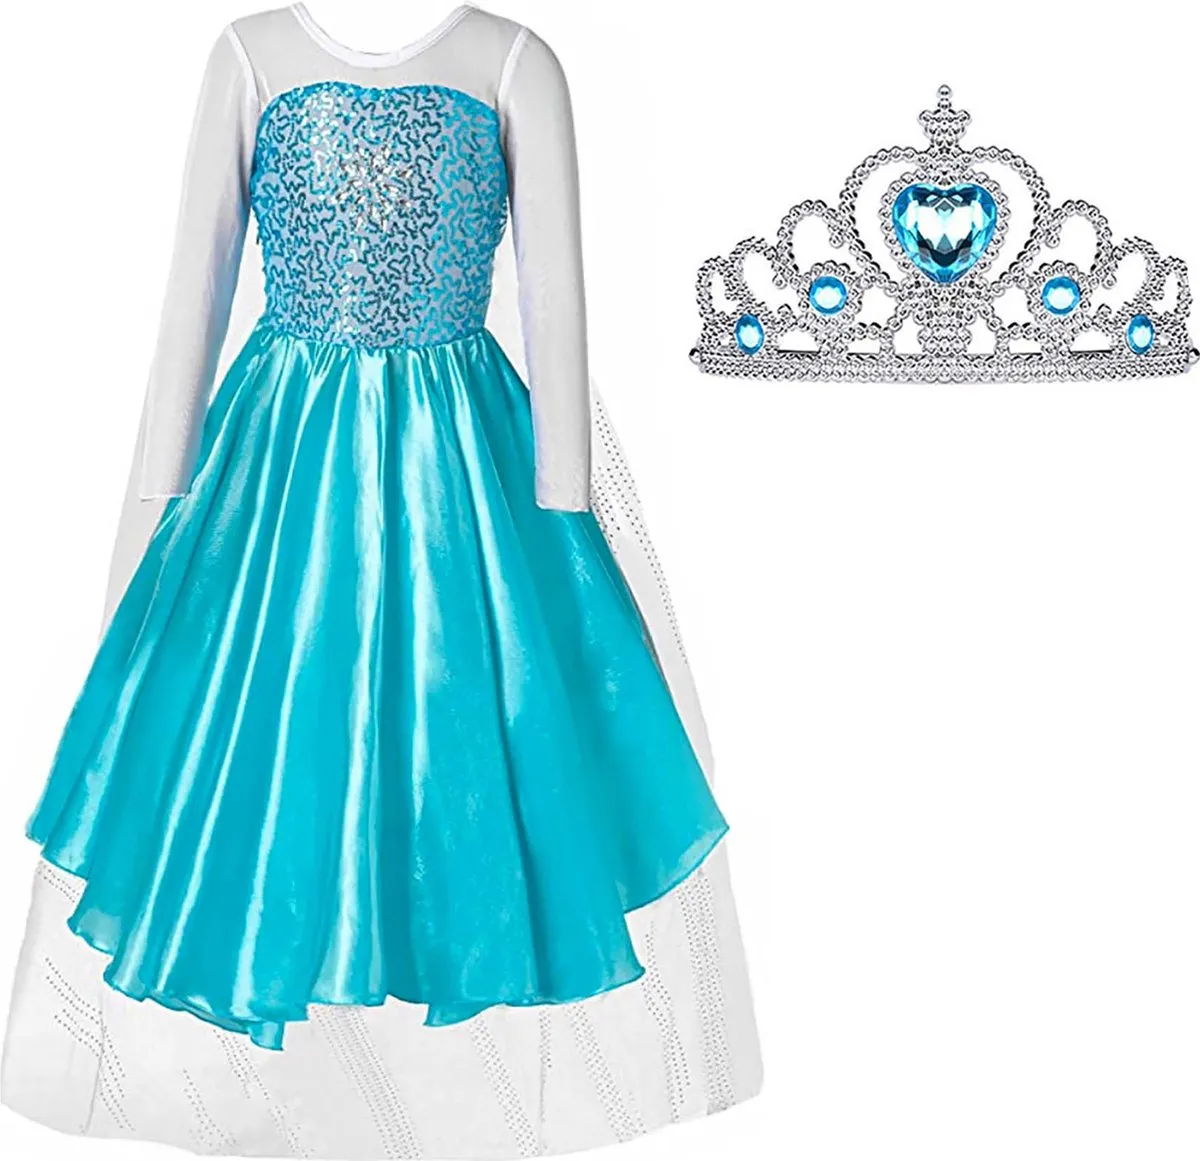 Prinsessenjurk meisje - Frozen Elsa  jurk - Prinsessen Verkleedkleding - 110 (120) - Tiara - Kroon speelgoed